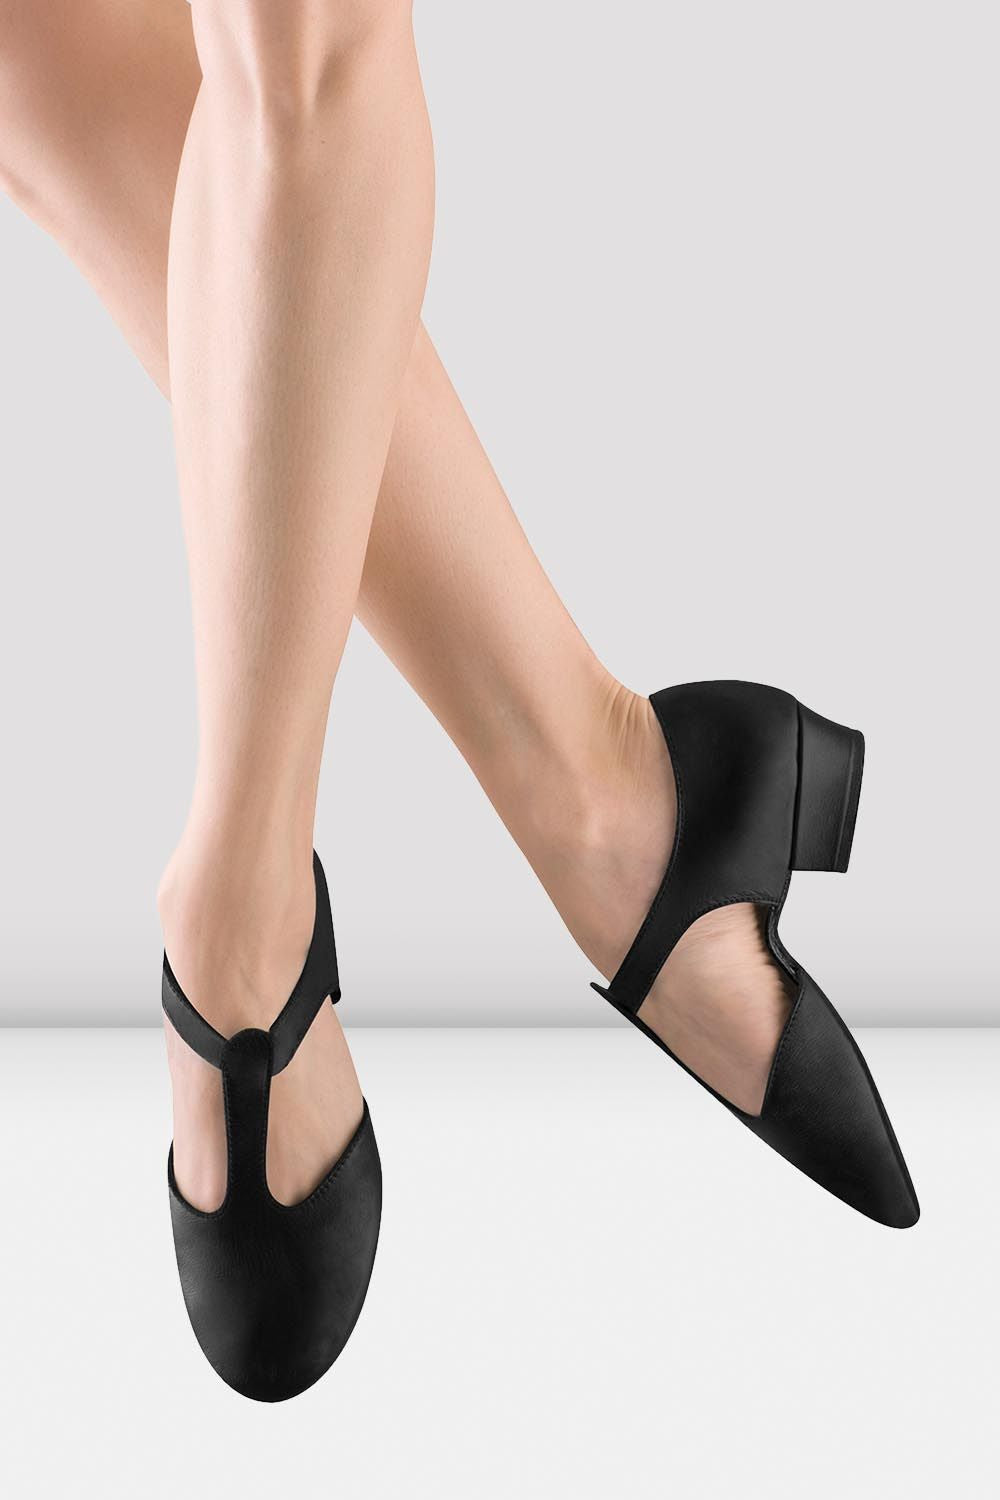 Women Dance Shoes Outdoor High Heels | Dance Shoes Boots Women Low Heel -  New 2023 - Aliexpress